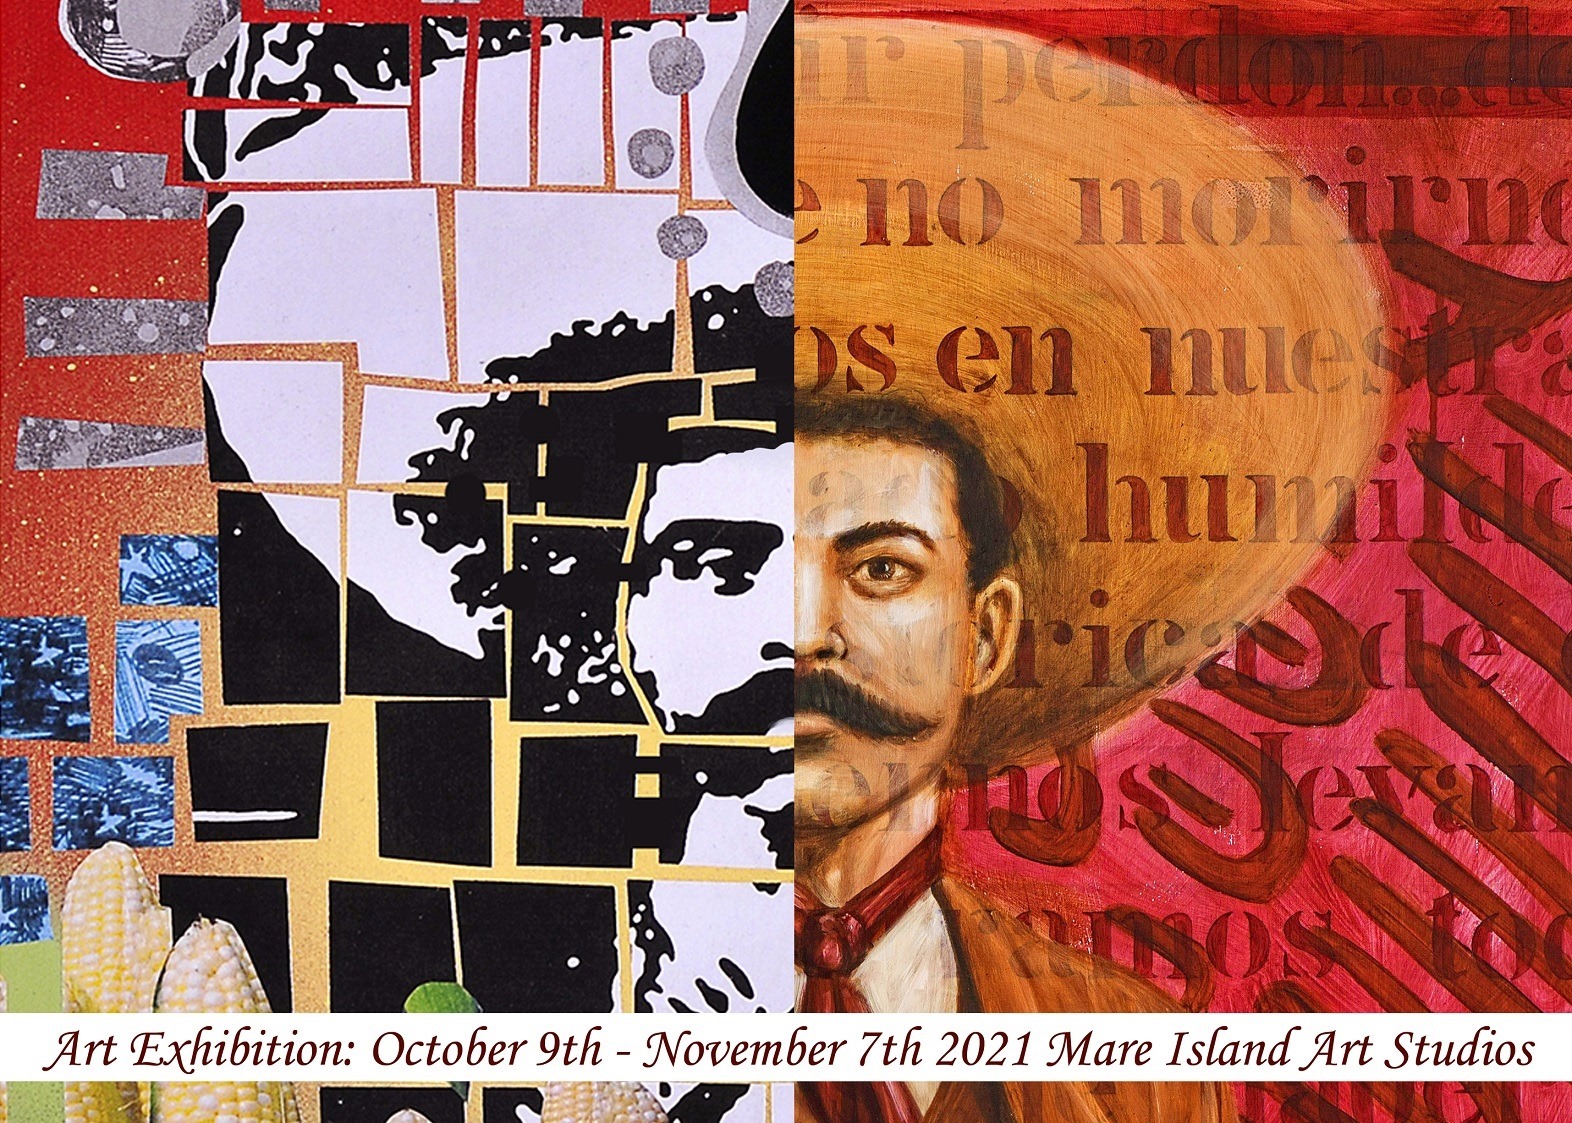 Art exhibition: Mark & Jose